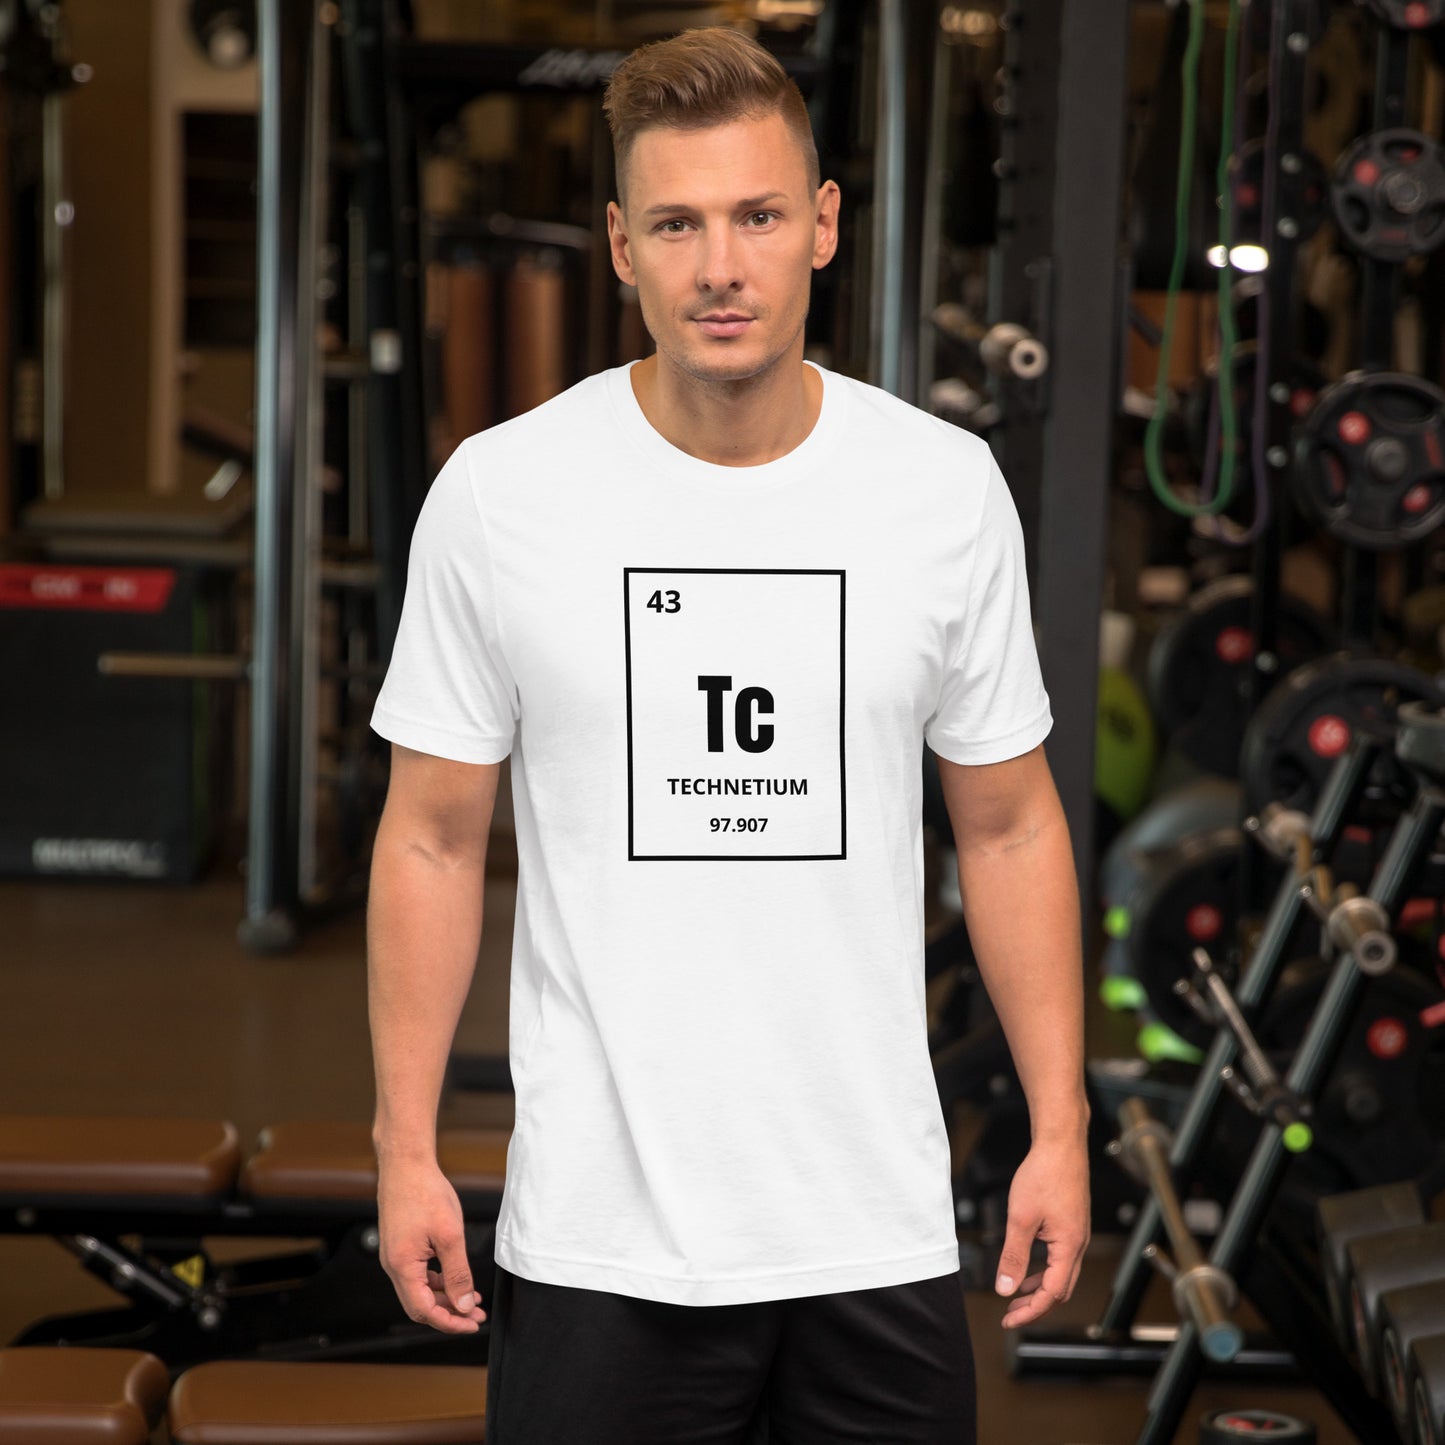 Technetium Element Unisex T-Shirt (First Element Humans Produced)